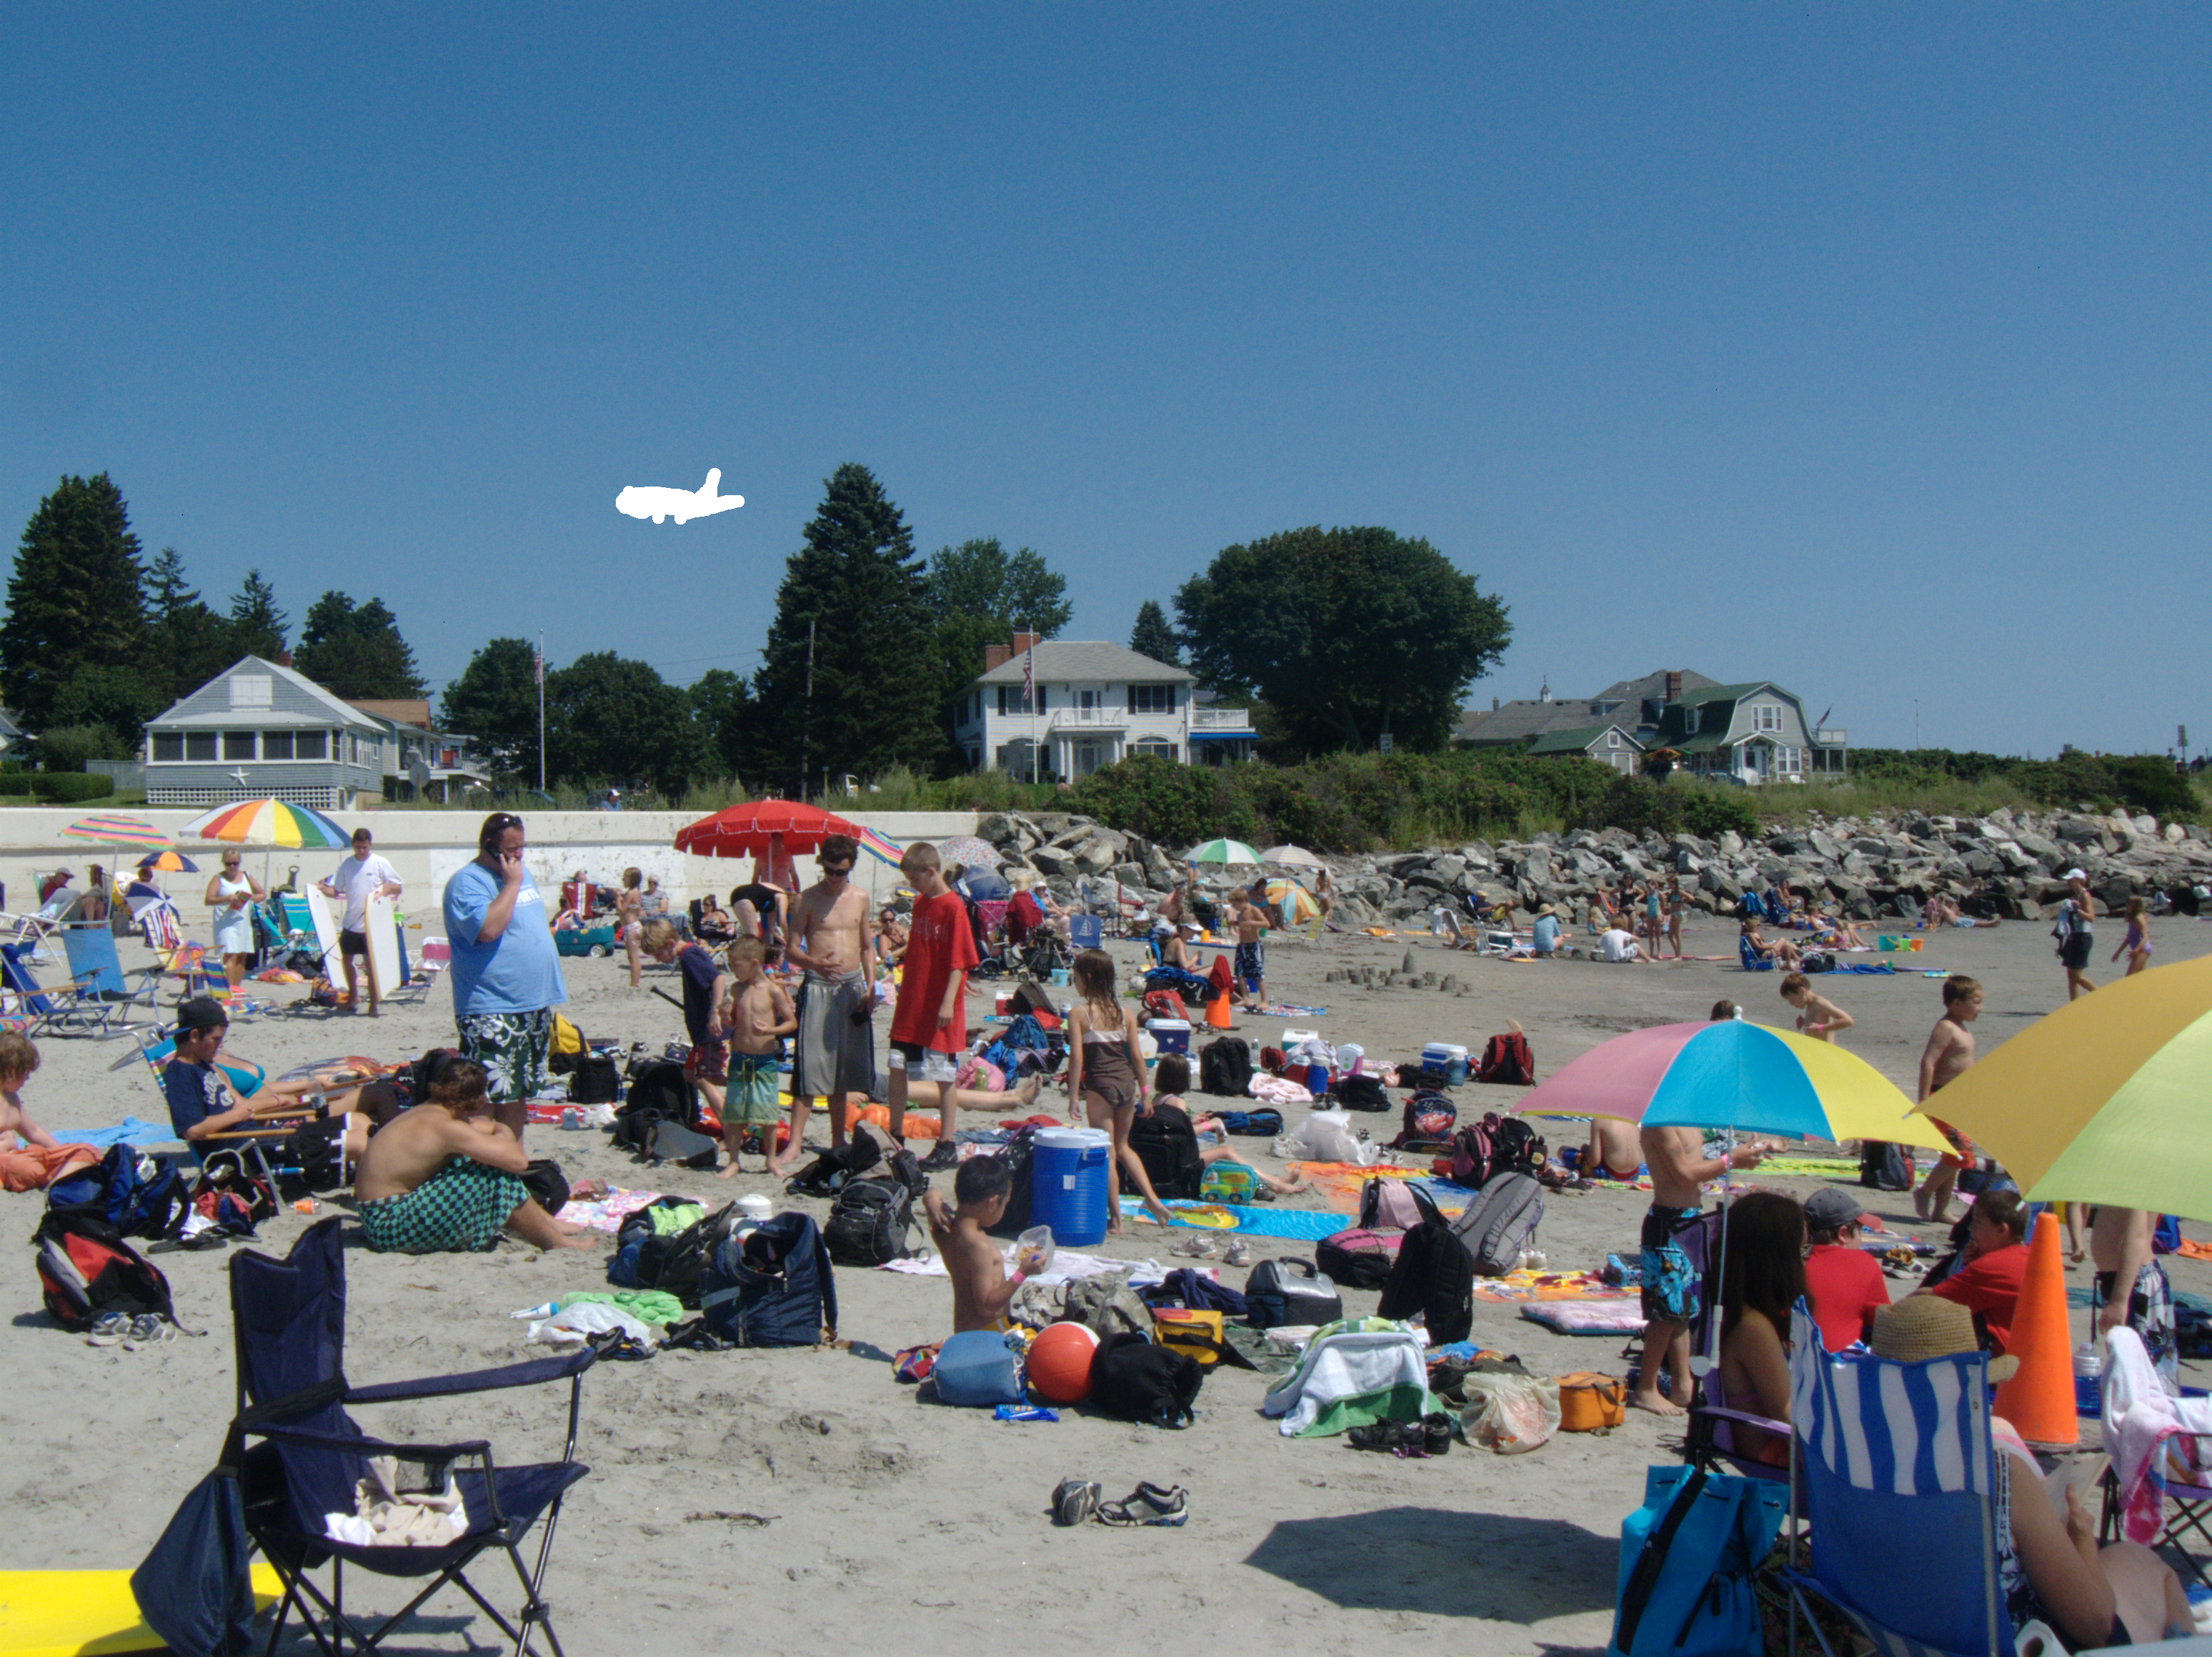 Beach scene with erased plane in the sky